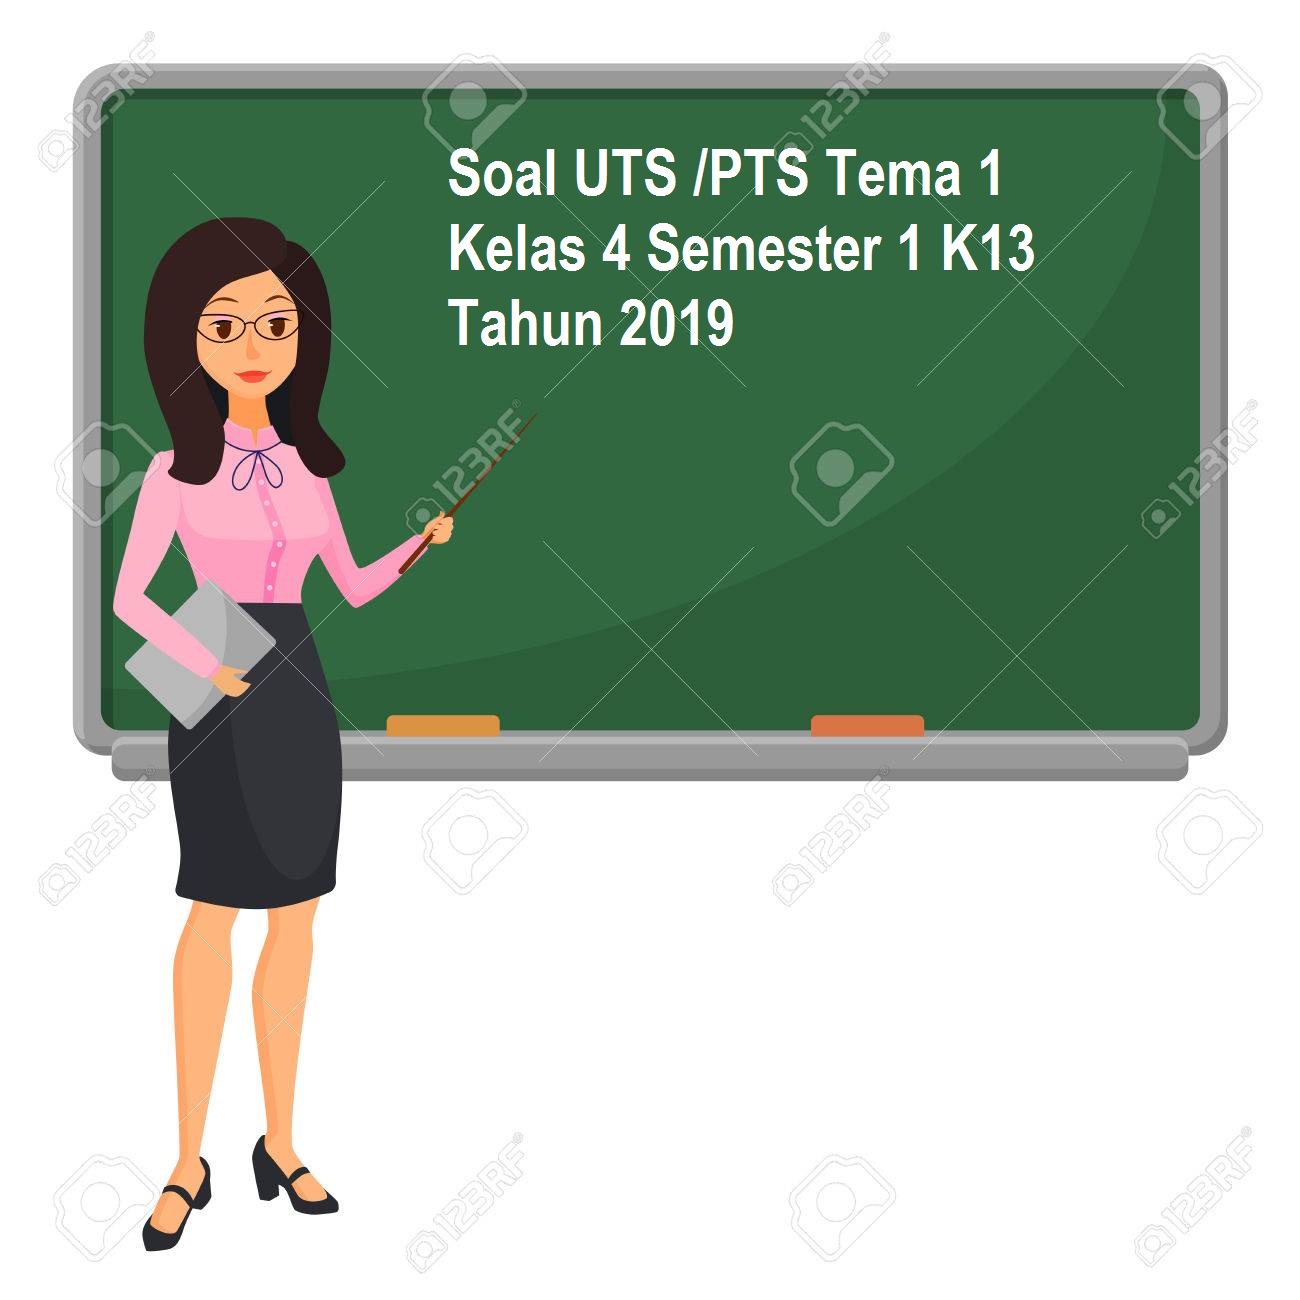 Soal UTS /PTS Tema 1 Kelas 4 Semester 1 K13 Tahun 2019  VannSmart